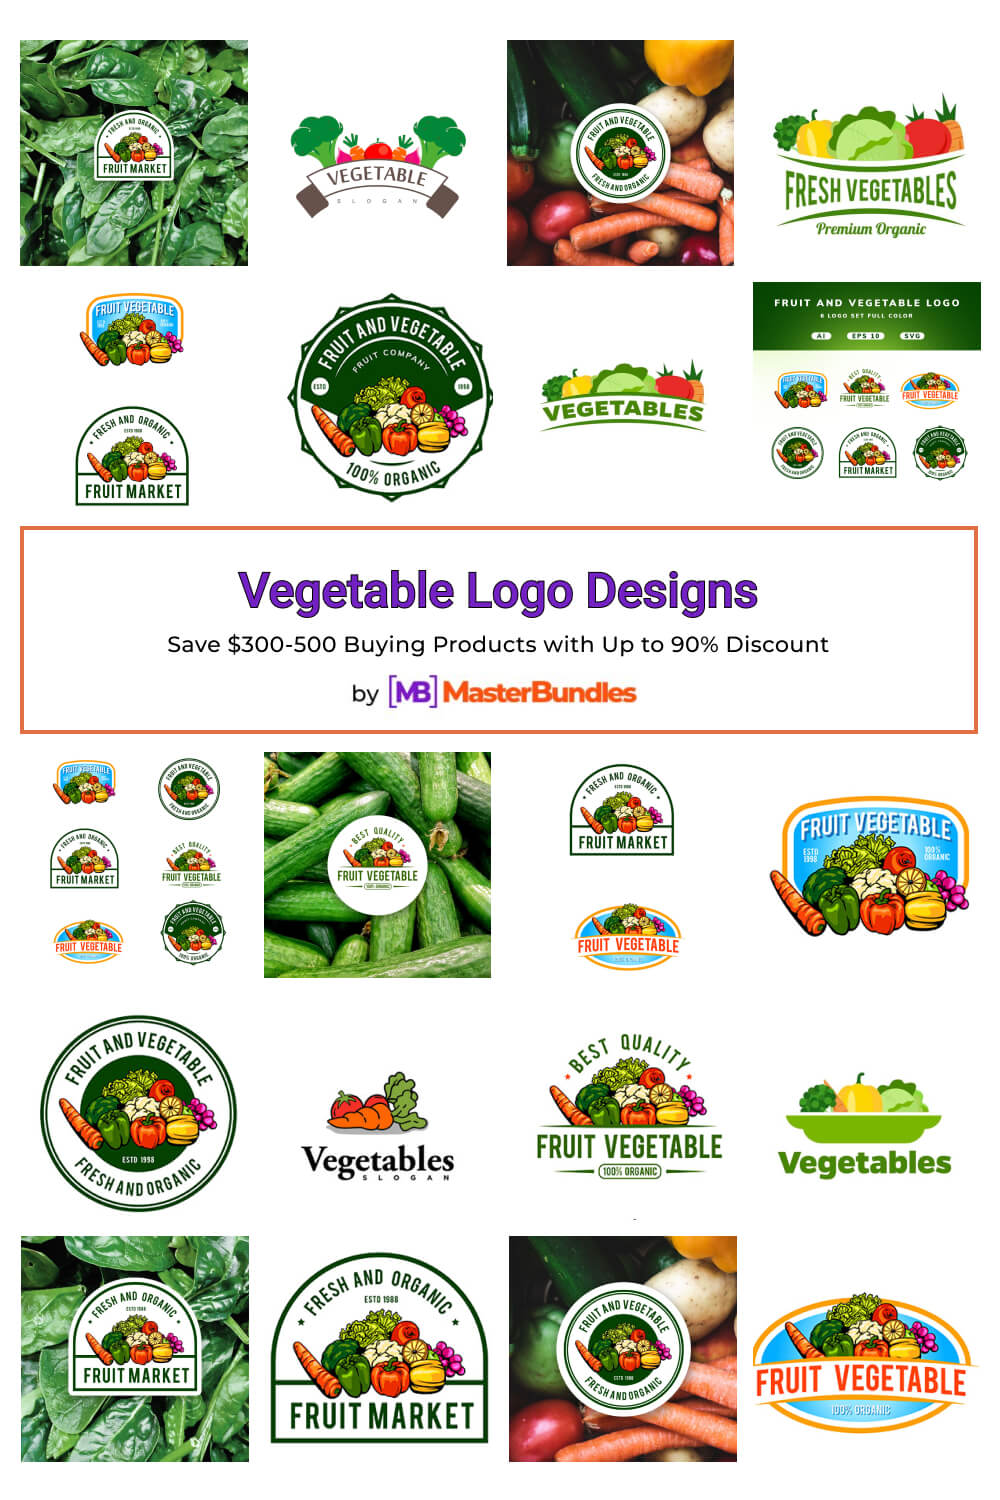 vegetable logo designs pinterest image.